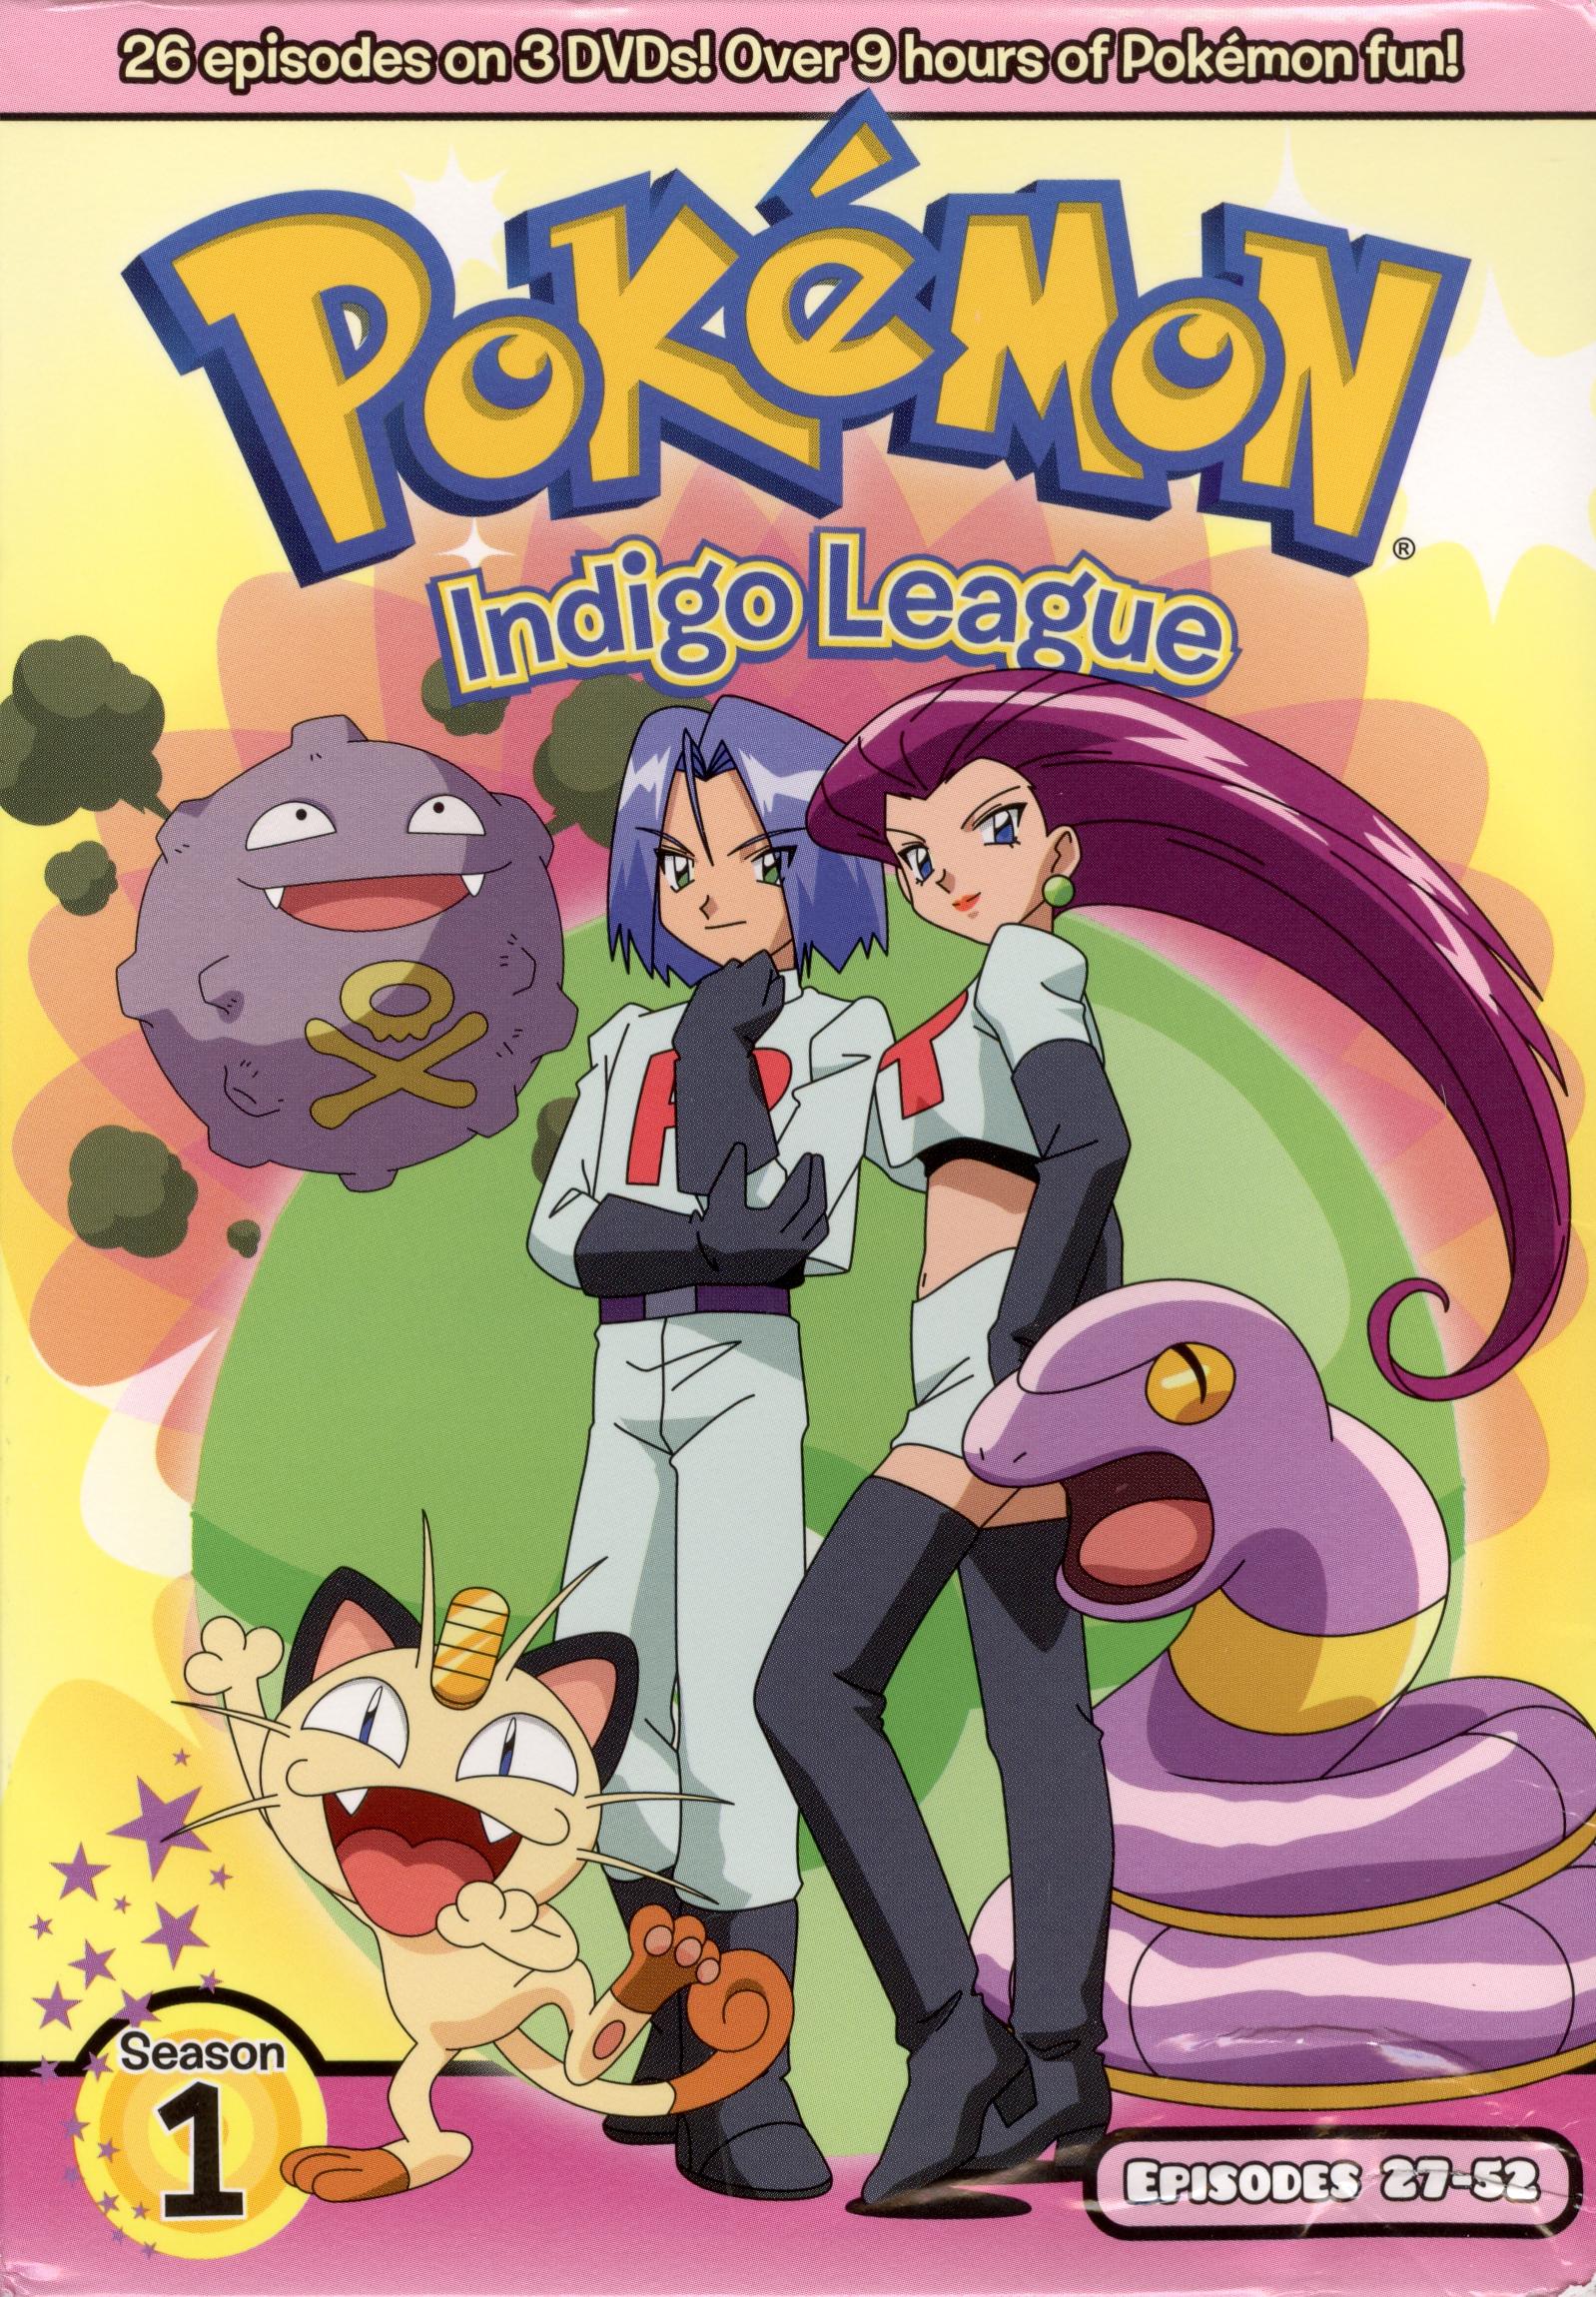 Pokemon Season 1: Indigo League Part 1